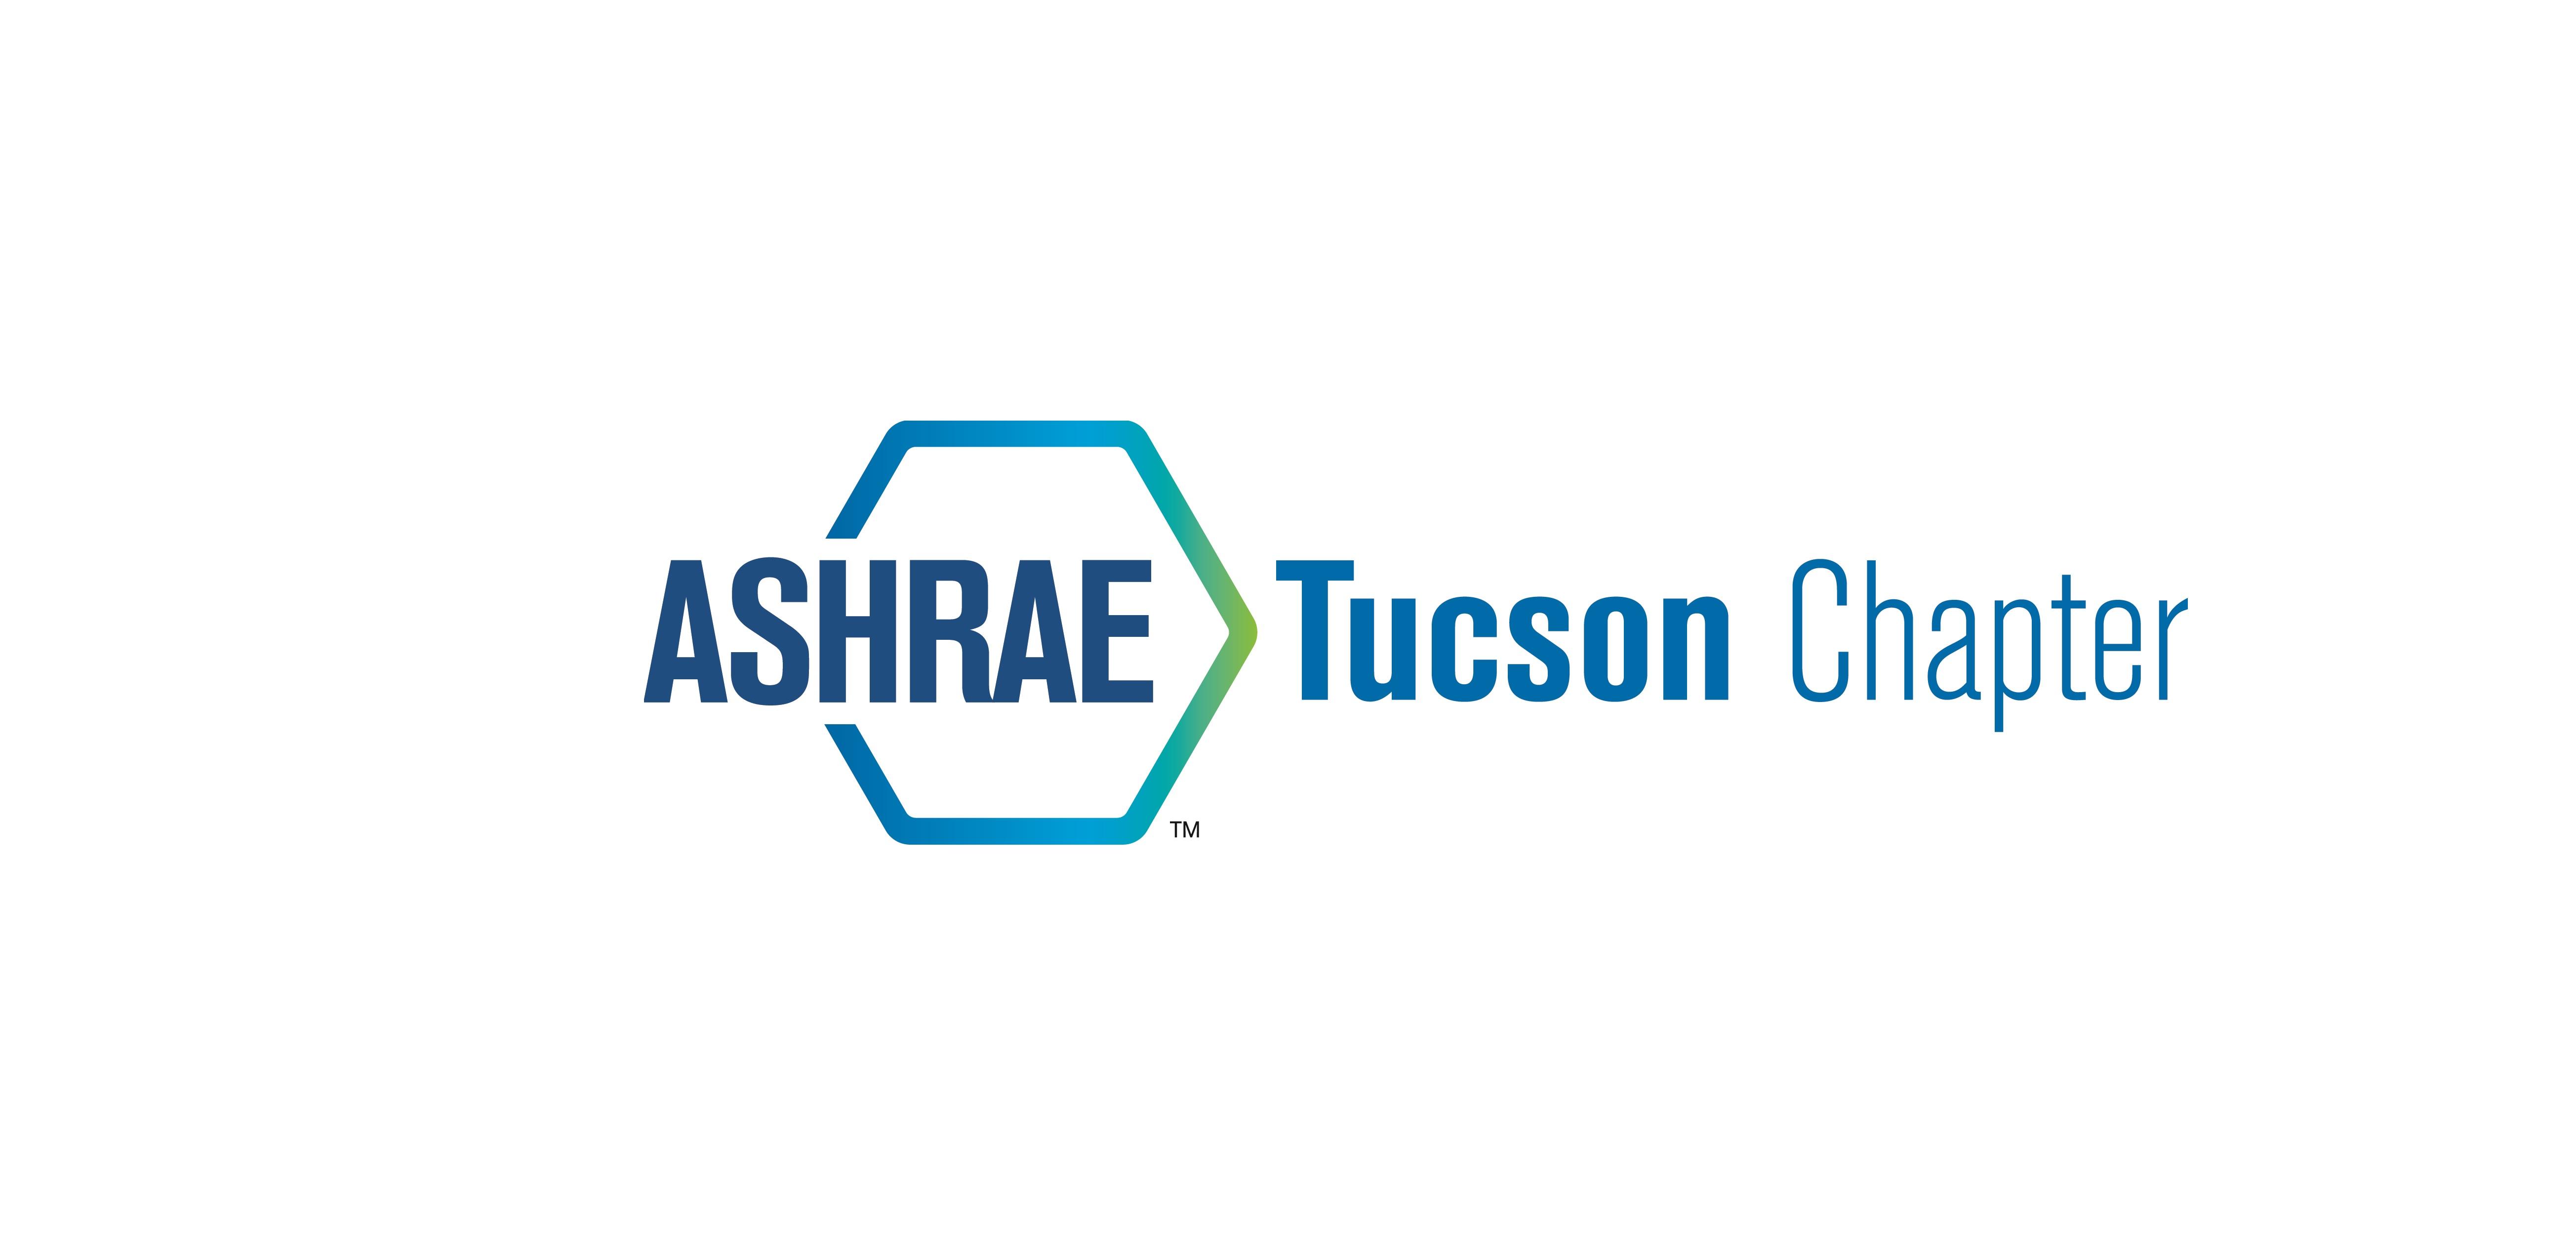 ASHRAE Tucson Chapter Golf Tournament - Friday April 27, 2018